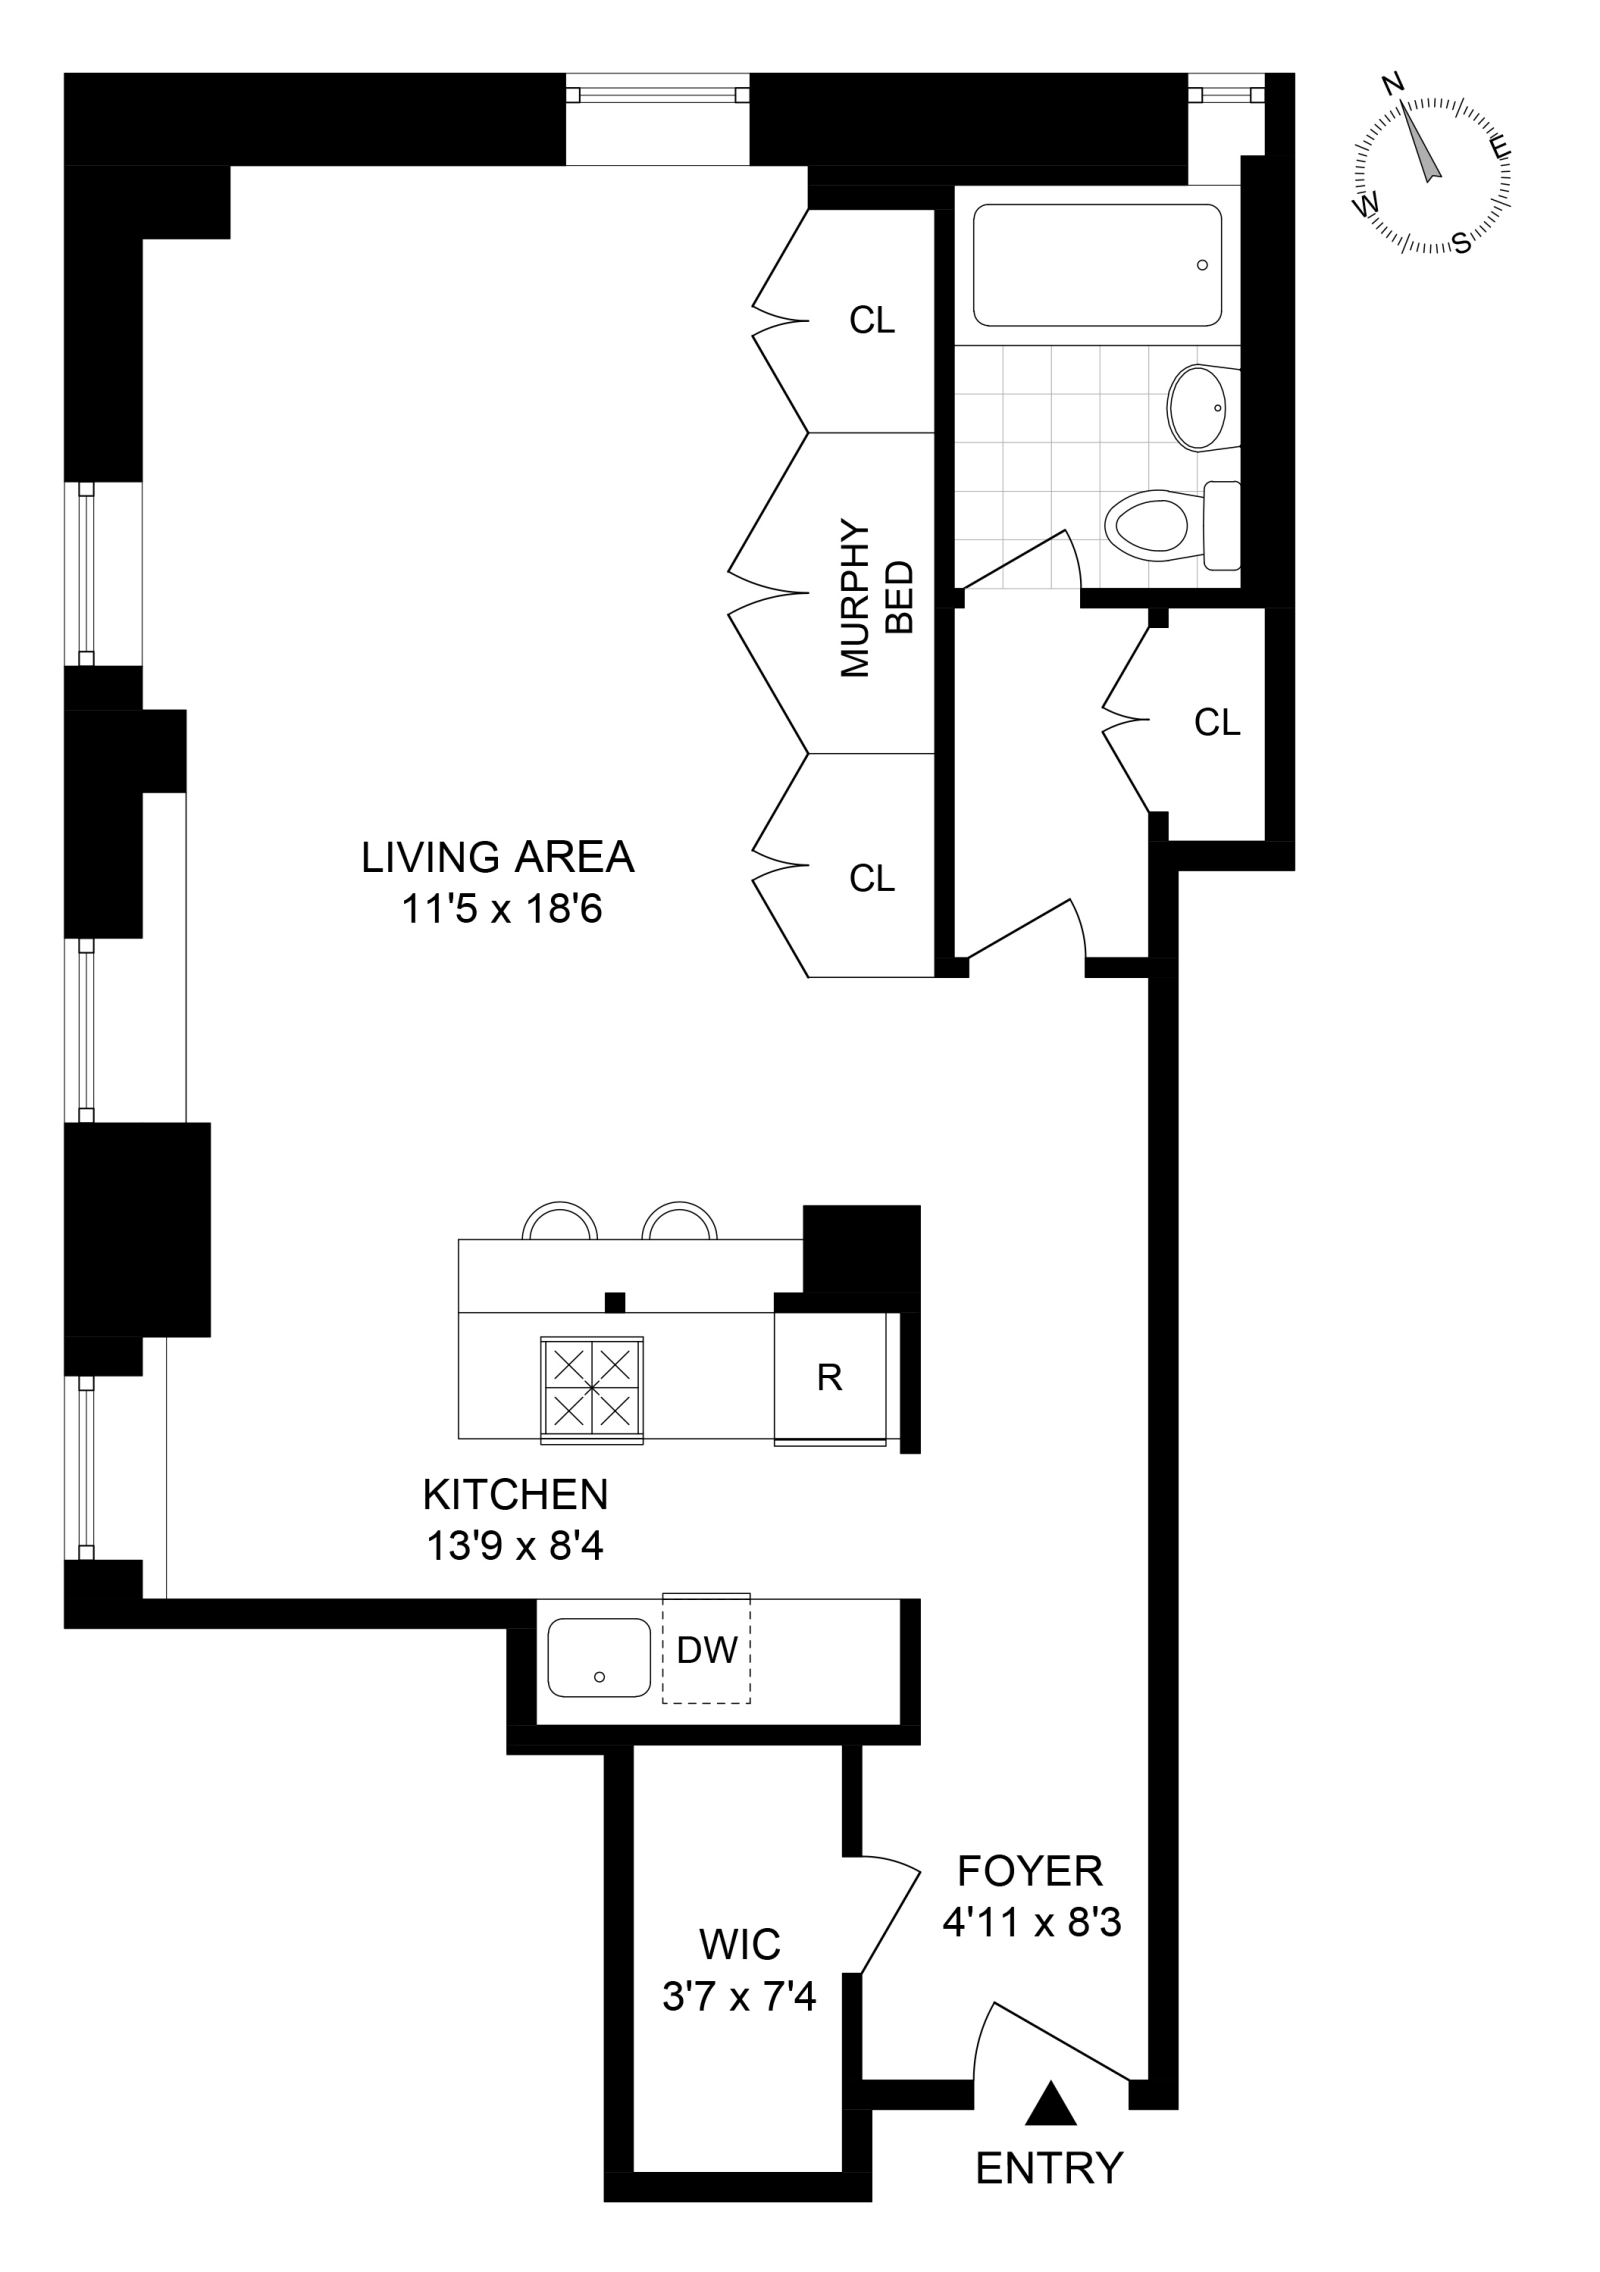 Floorplan for 111 Hicks Street, 17F